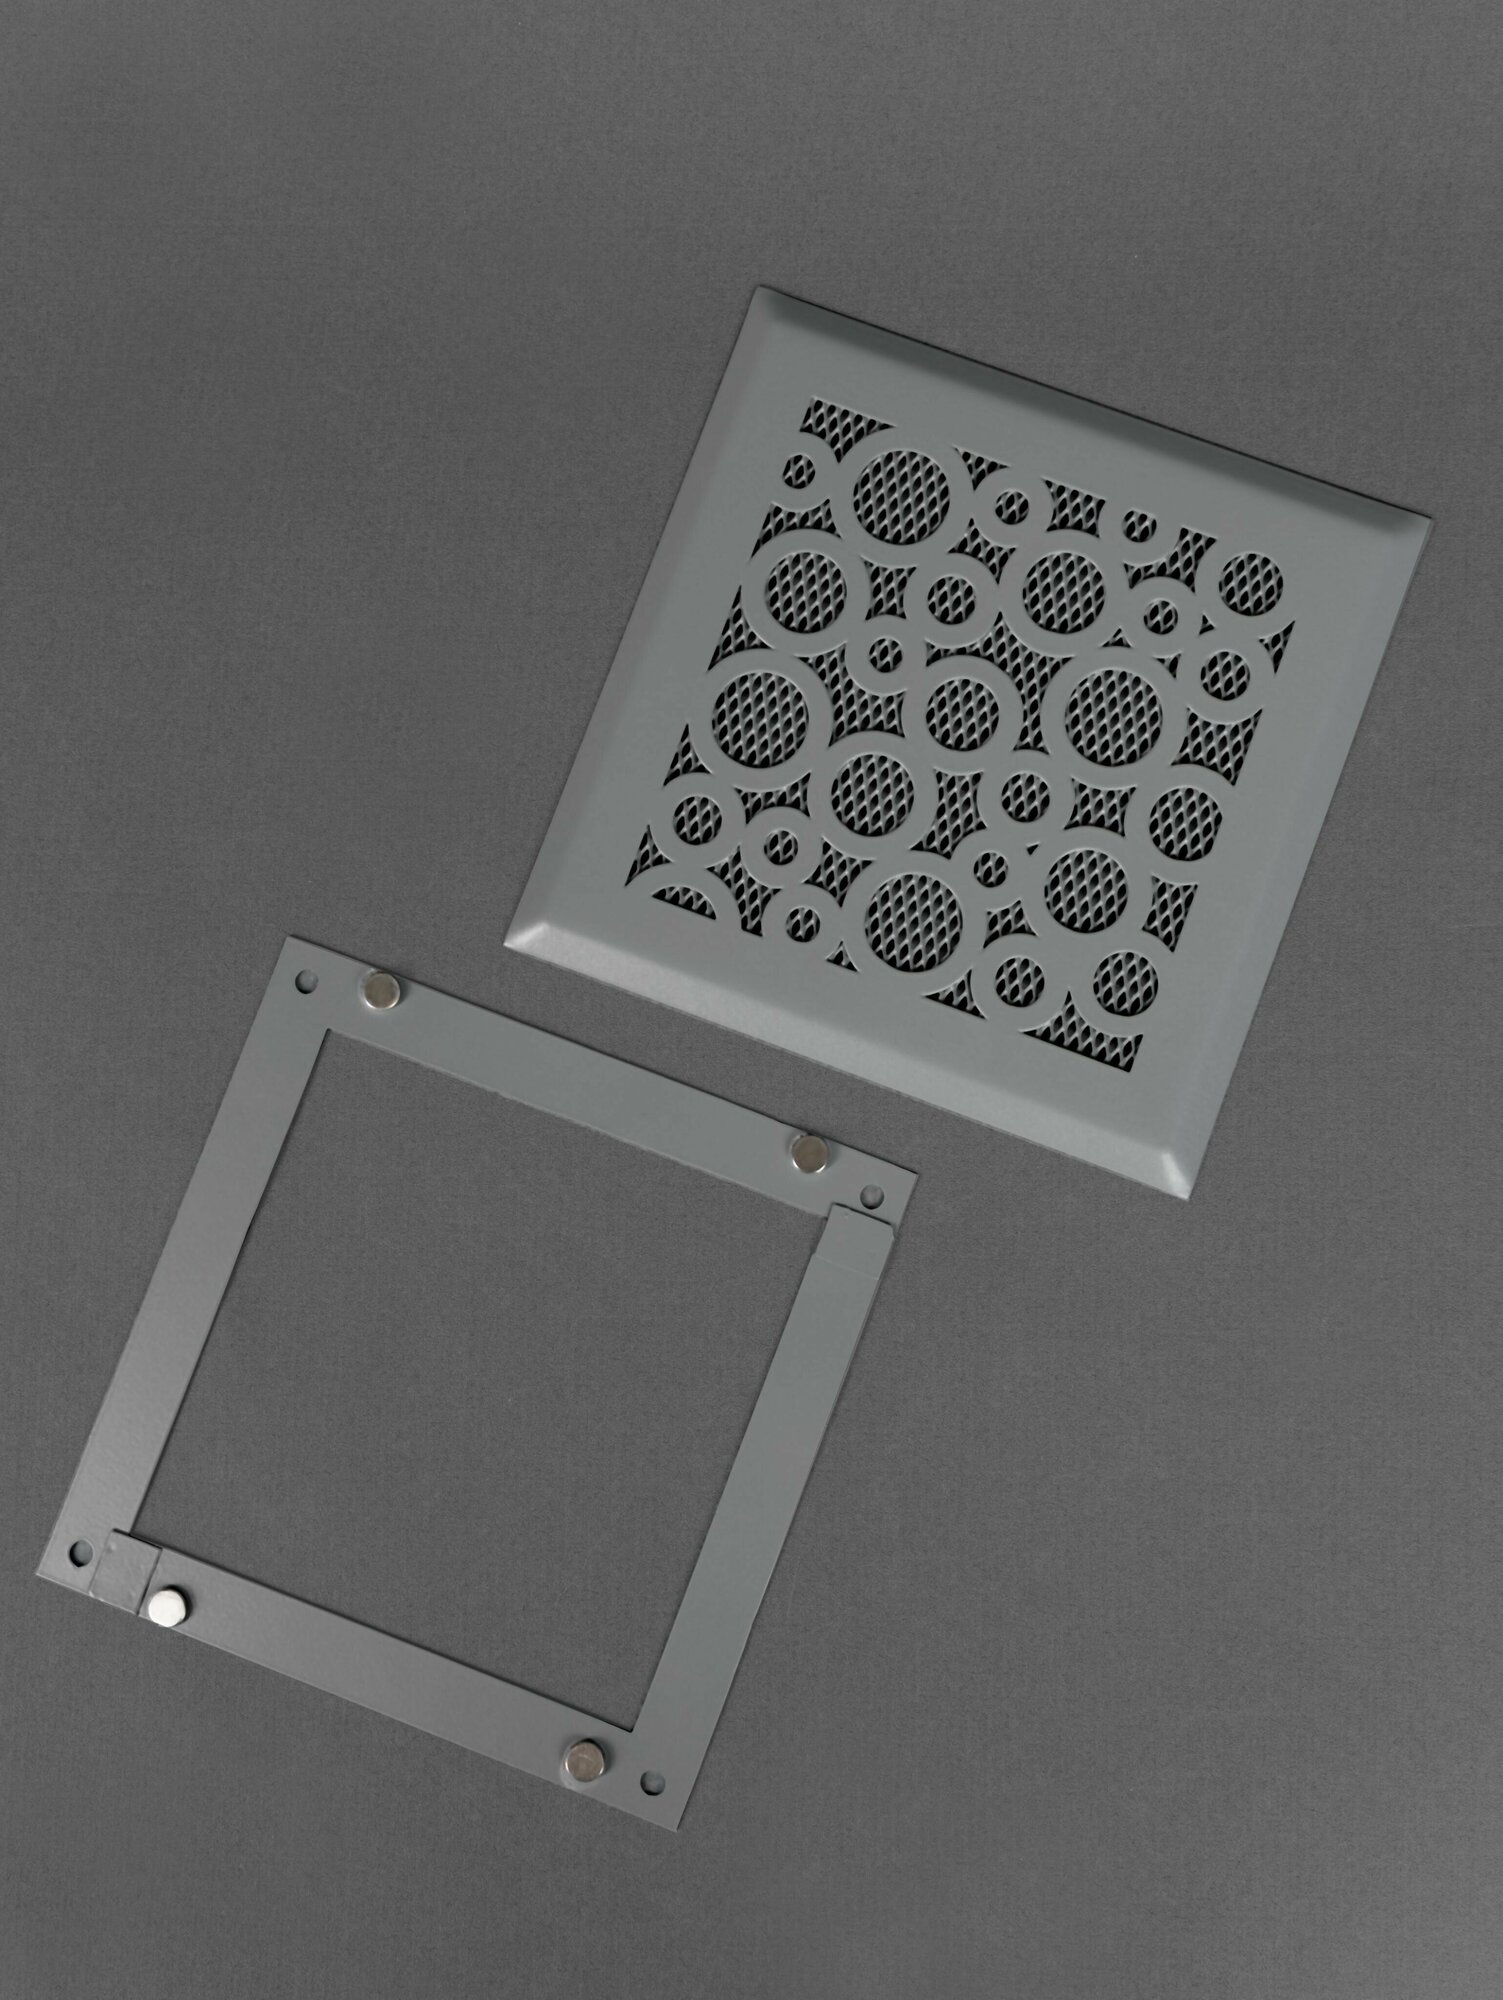 Решетка вентиляционная на магнитах 150x150 мм. съемная (РП150 кольцо) металлическая от производителя Родфер - фотография № 8